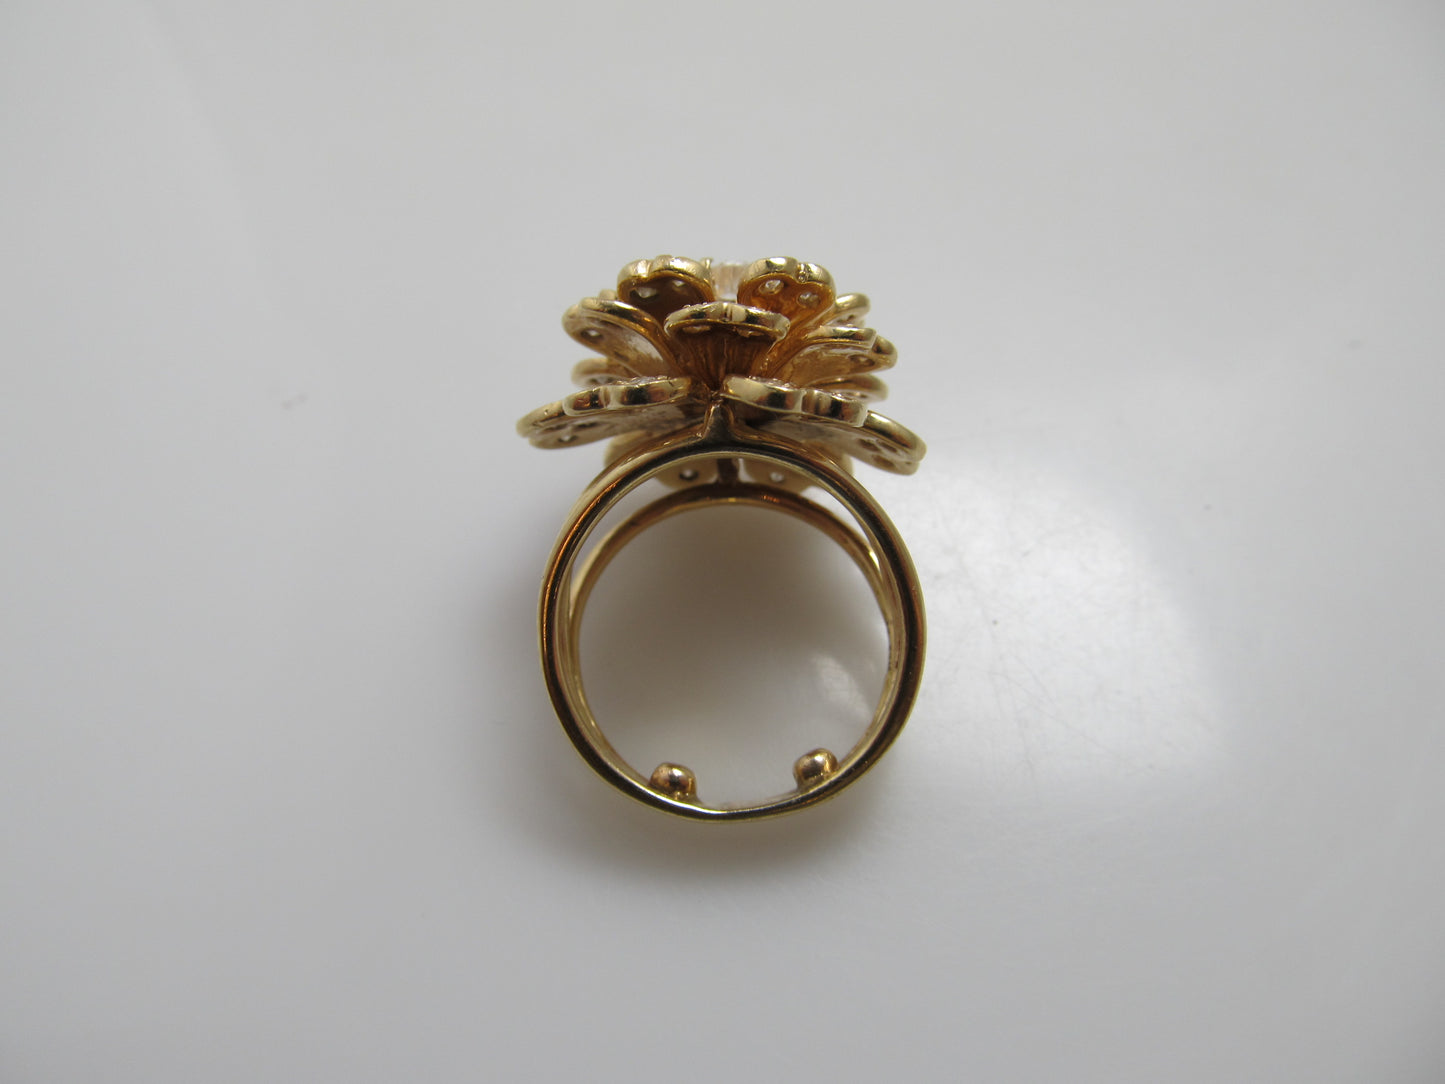 1ct TW diamond flower ring, 14k yellow gold